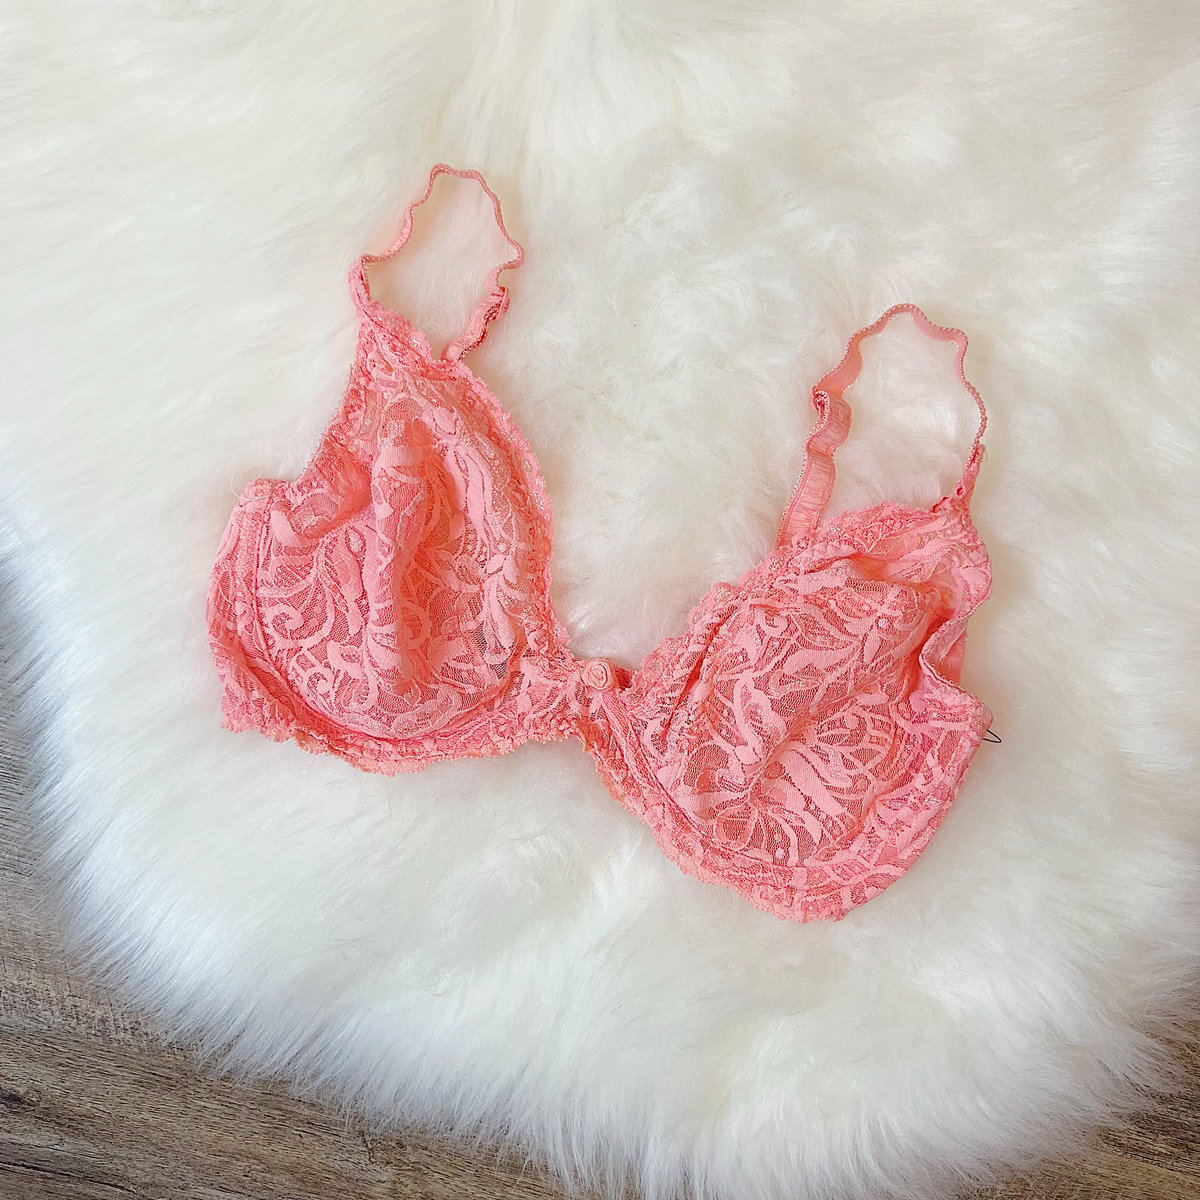 Victoria's Secret VINTAGE lace second skin satin Bra 34B Pink